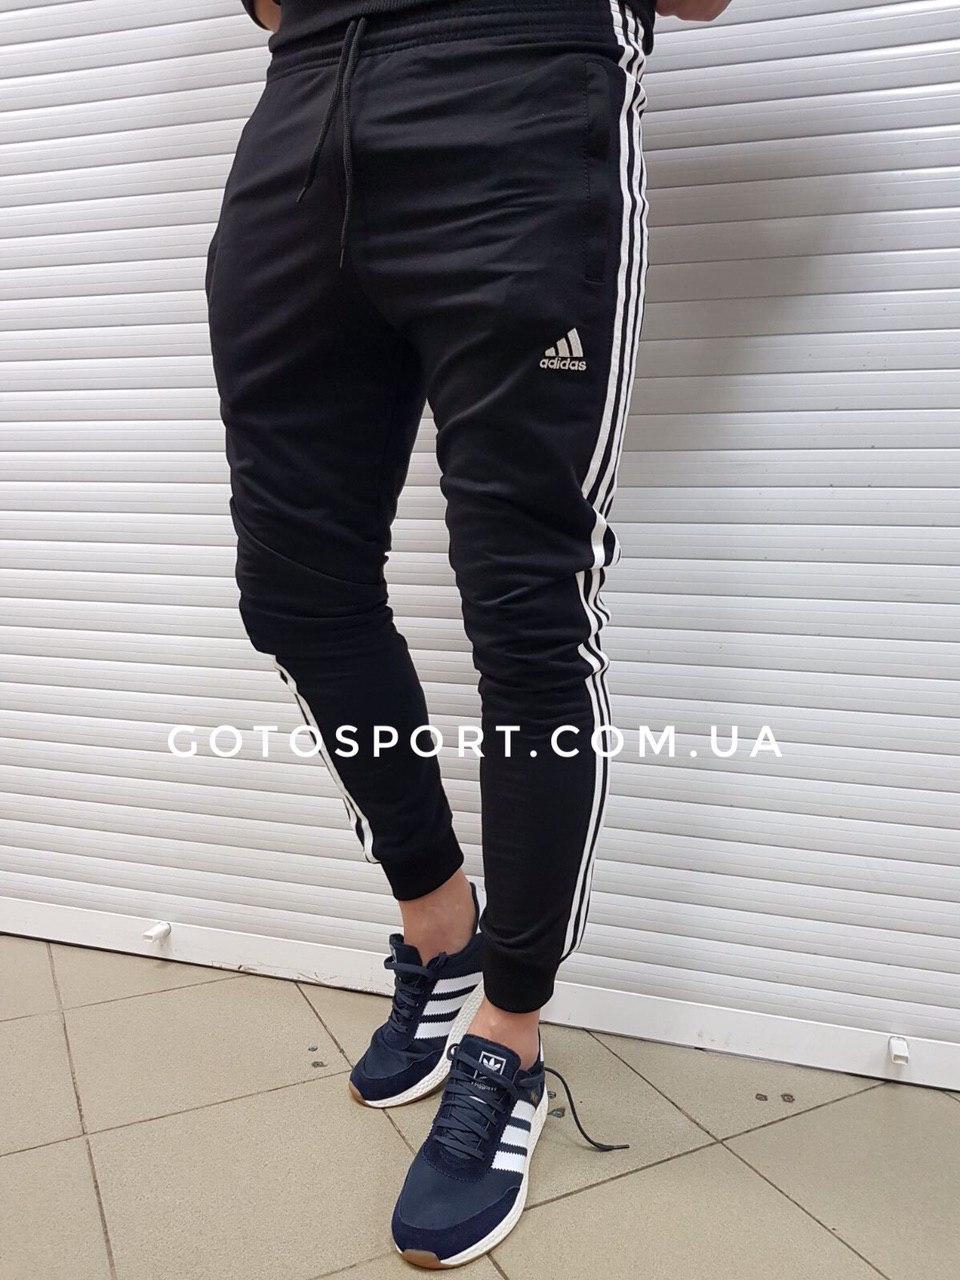 Купить Мужские спортивные штаны Adidas Breed, цена 899 грн — Prom.ua  (ID#998140370)